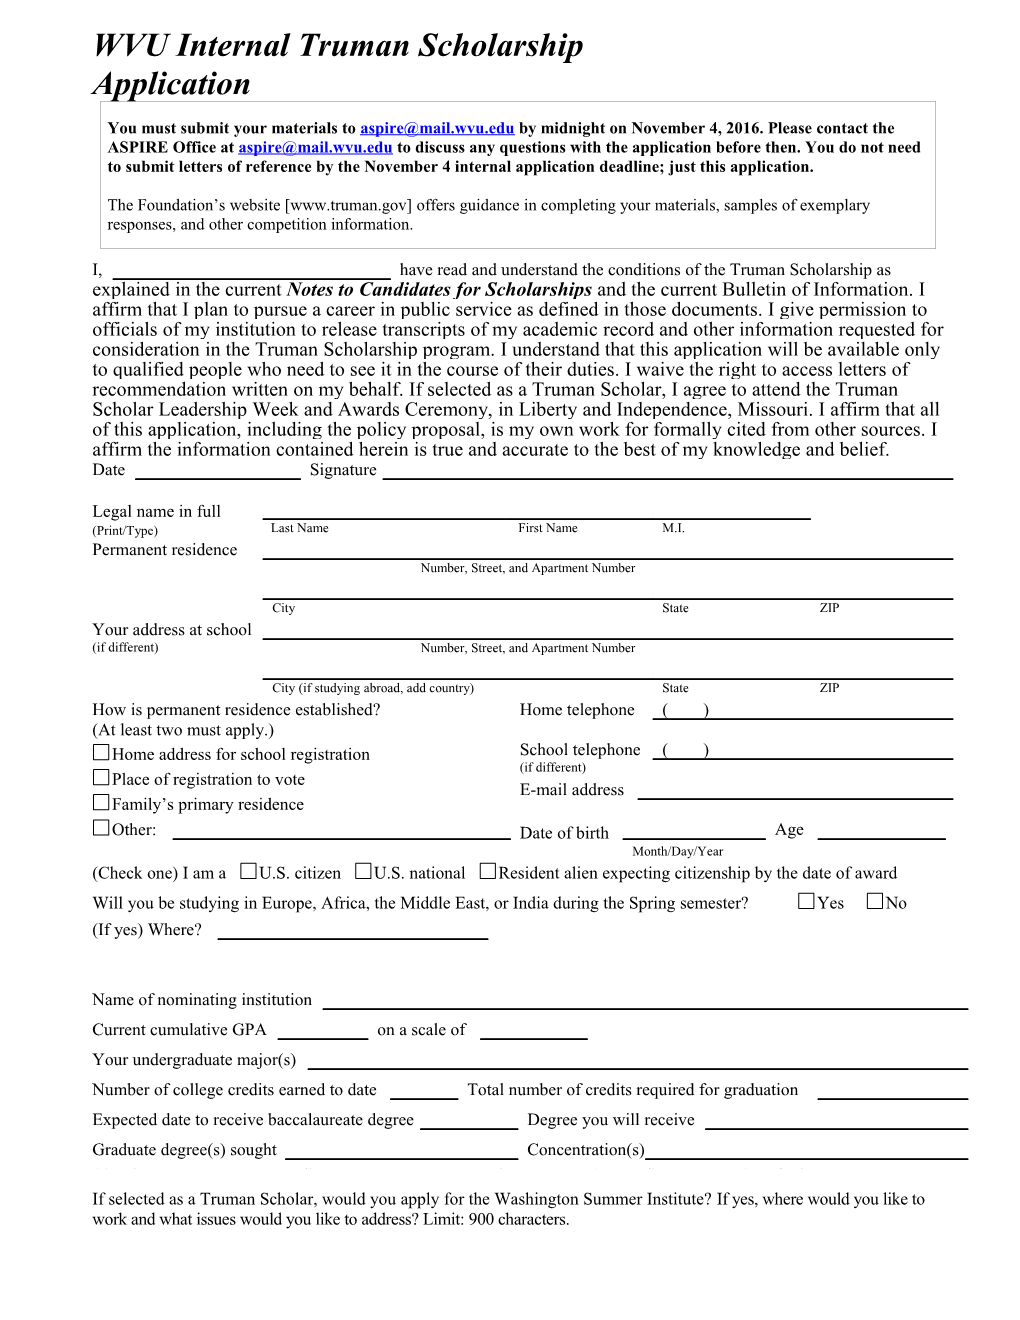 WVU Internal Truman Scholarship Application